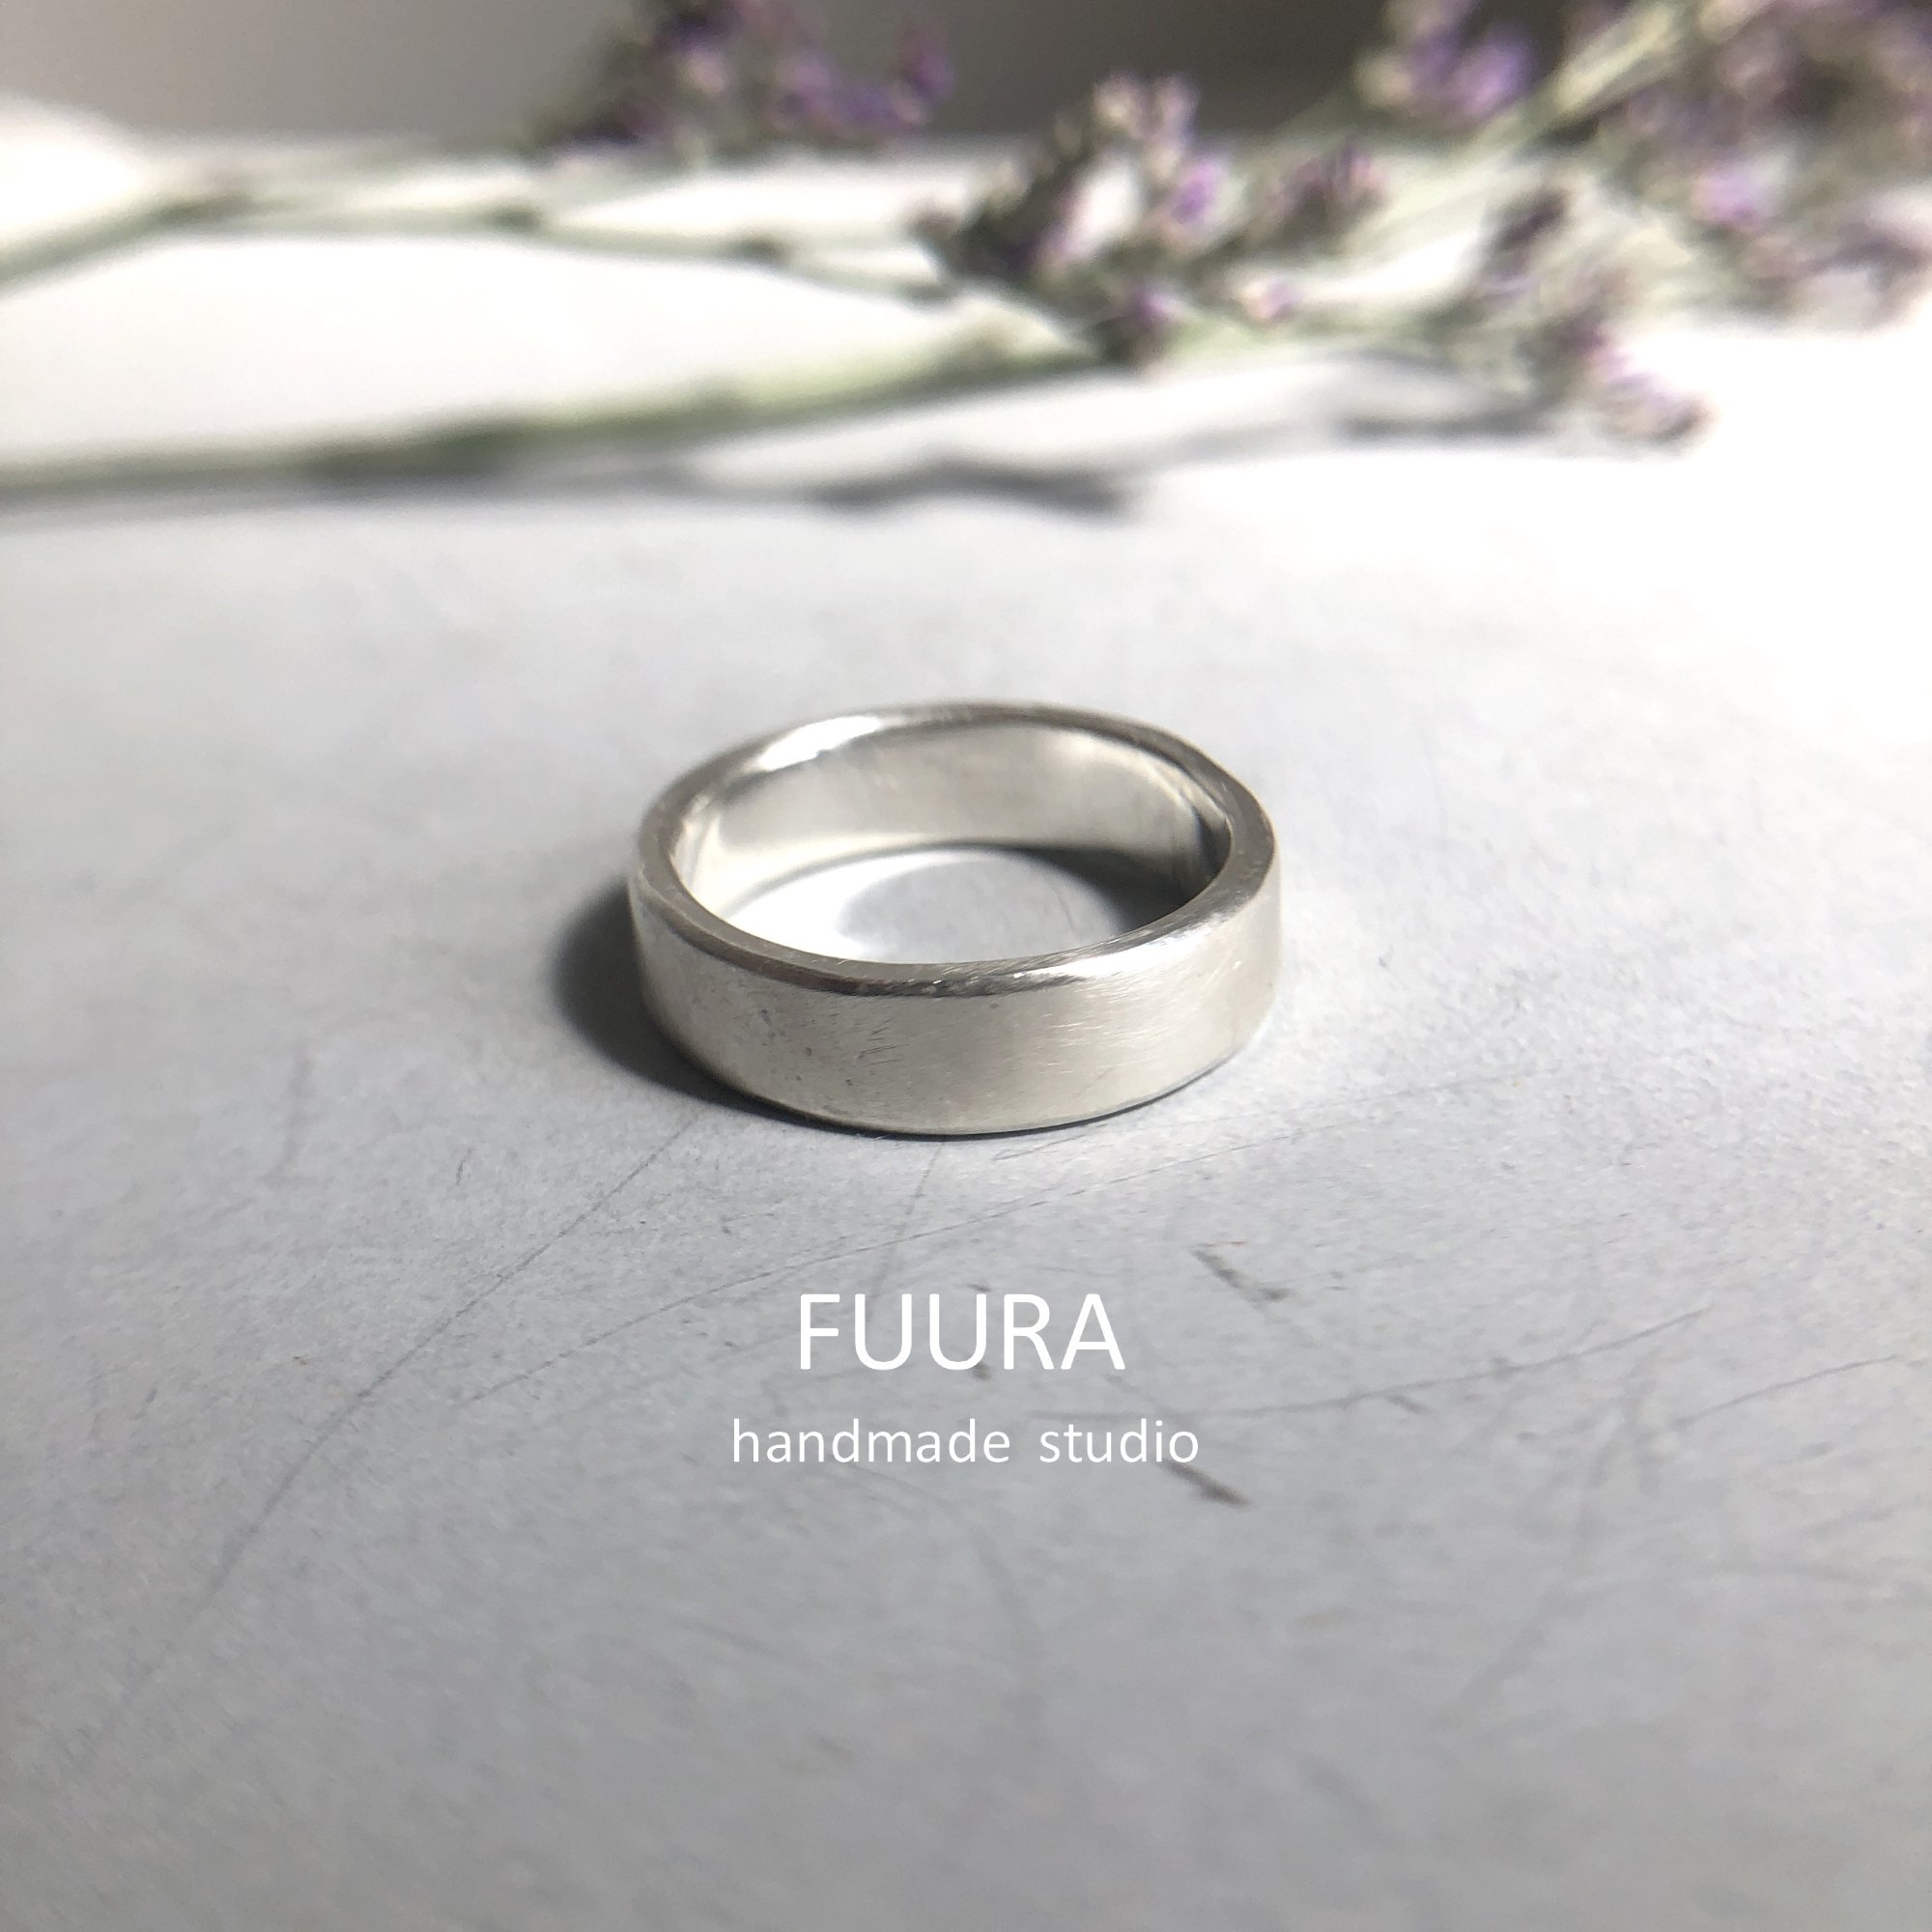 mat ring silver 5mm / マットリング シルバー 5mm - FUURA handmade